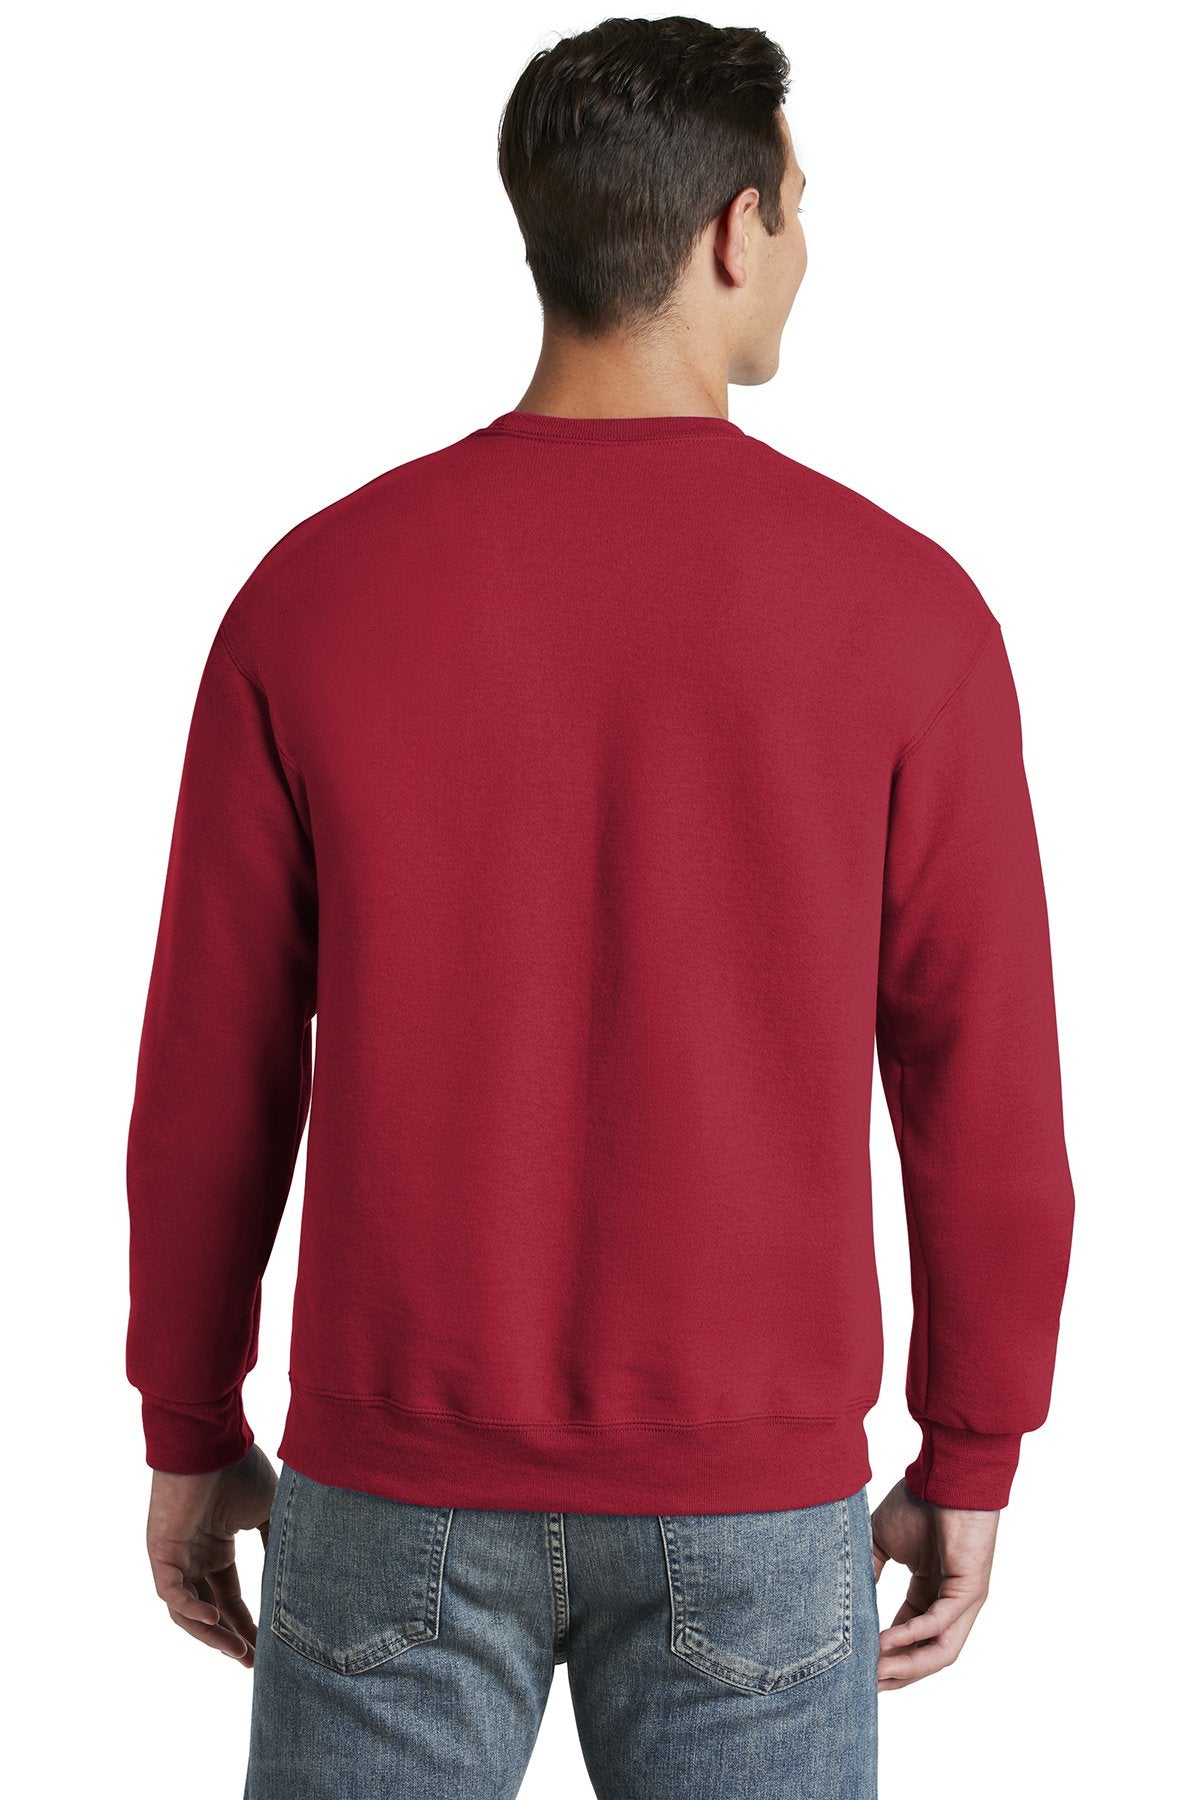 Jerzees Super Sweats NuBlend Crewneck Sweatshirt 4662M True Red